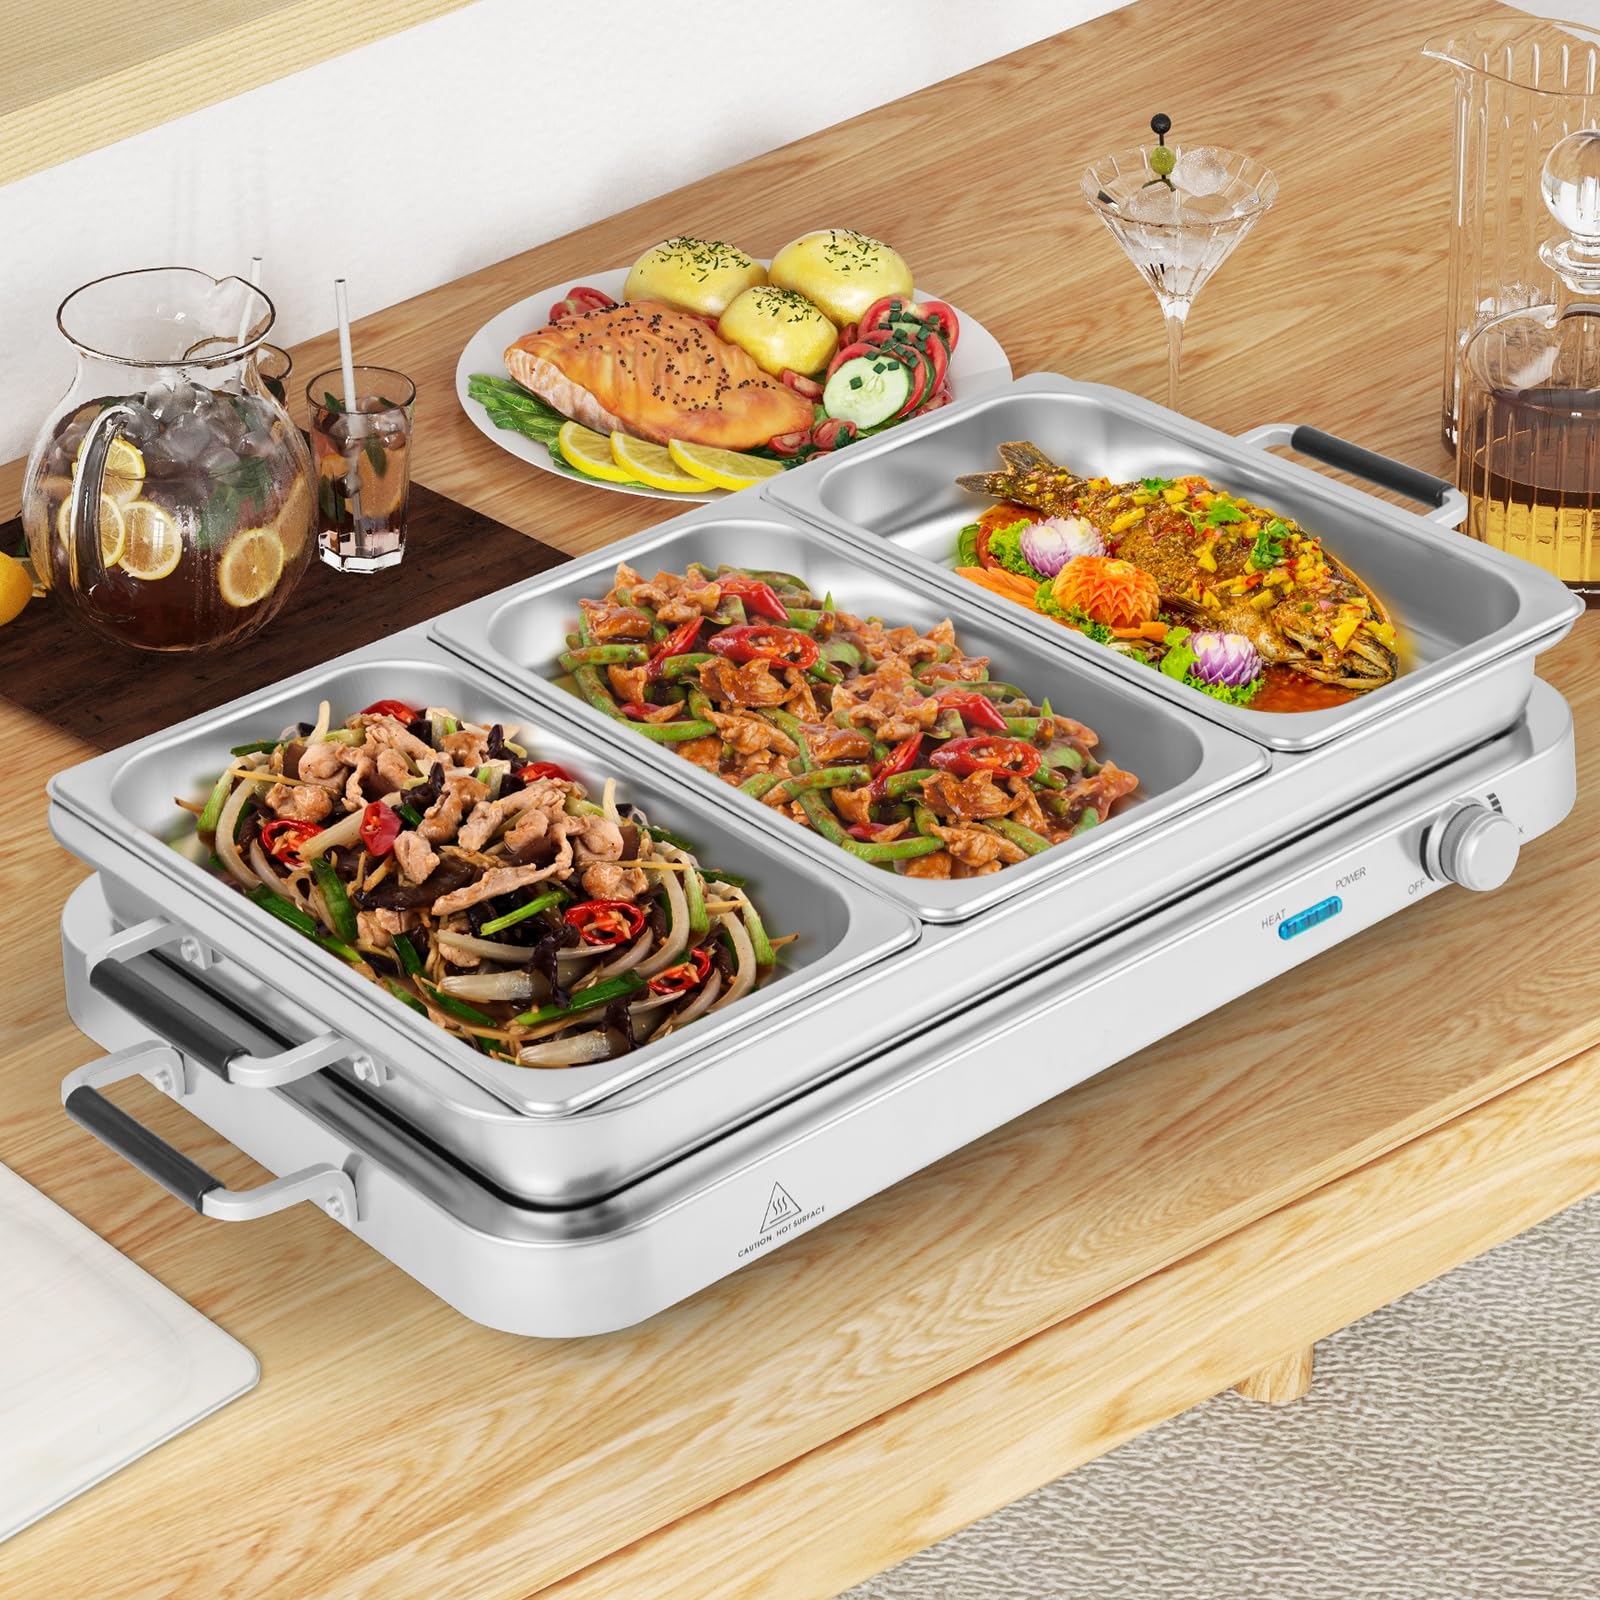 Giantex Buffet Server & Electric Food Warmer, 2-in-1 Food Warming Tray, Adjustable Temperature